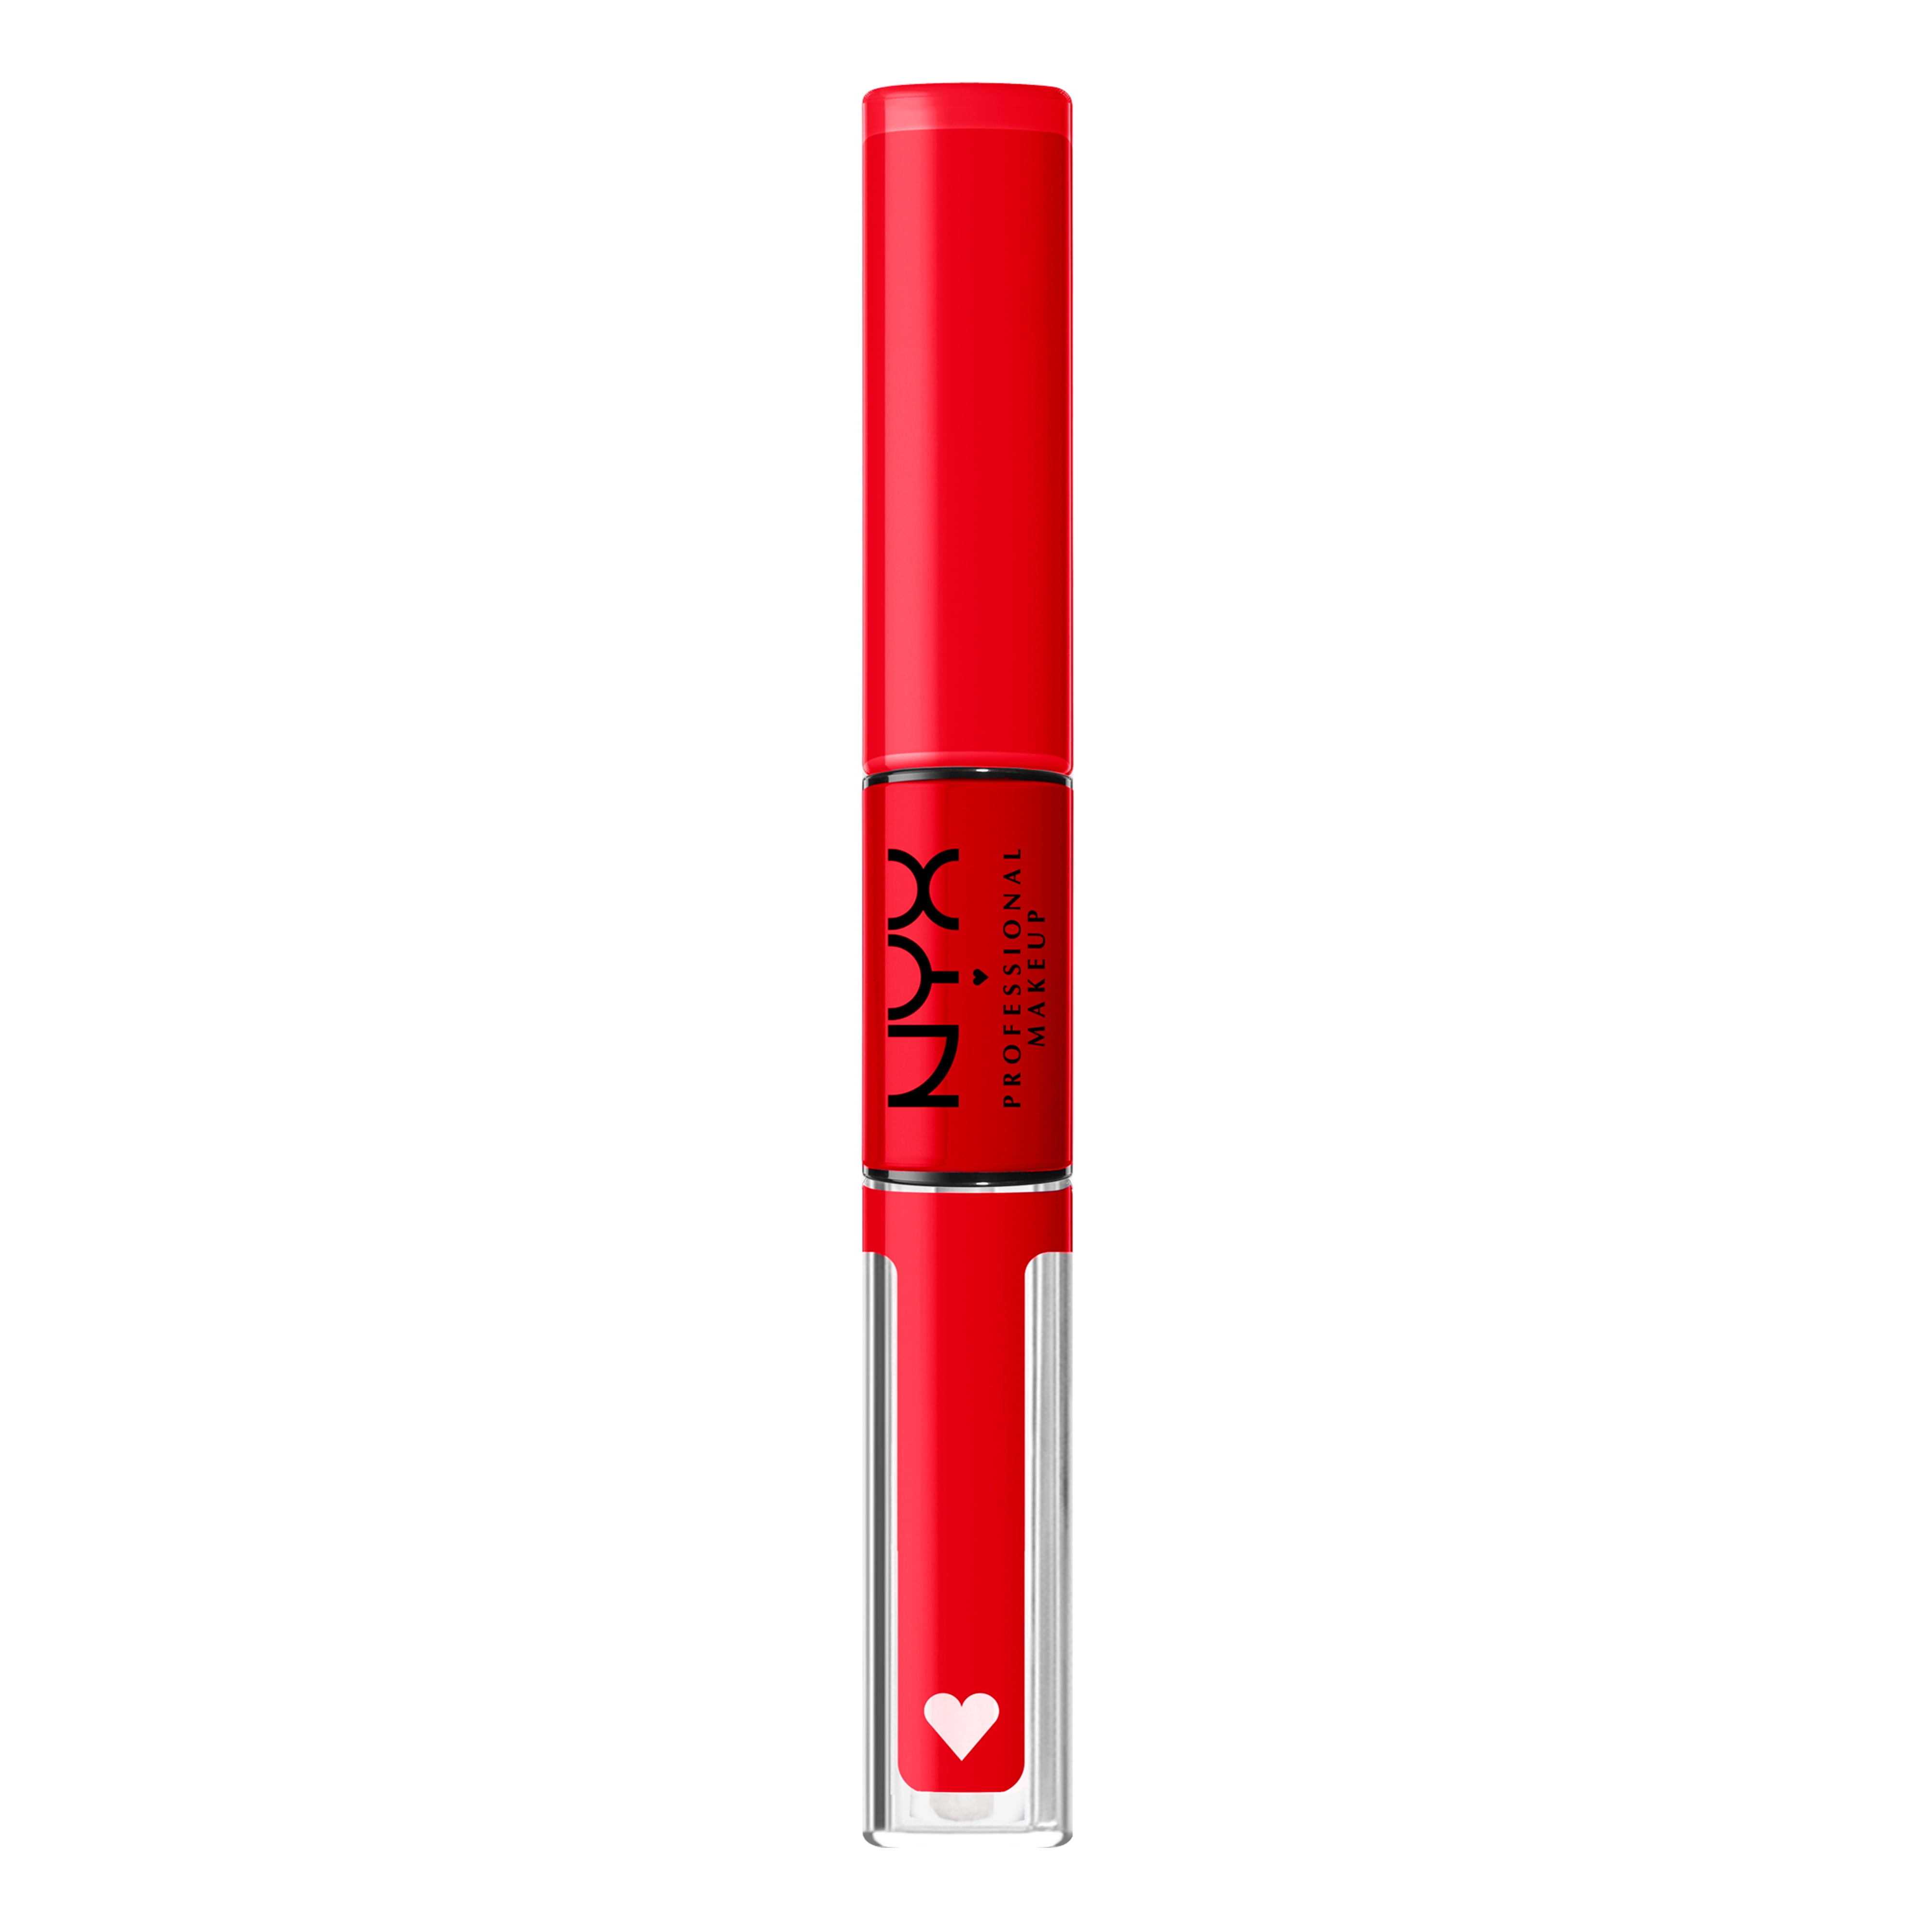 Liquid Loud Shine Professional Long-Lasting In Shine Makeup NYX Vegan Rebel High Red Lipstick,